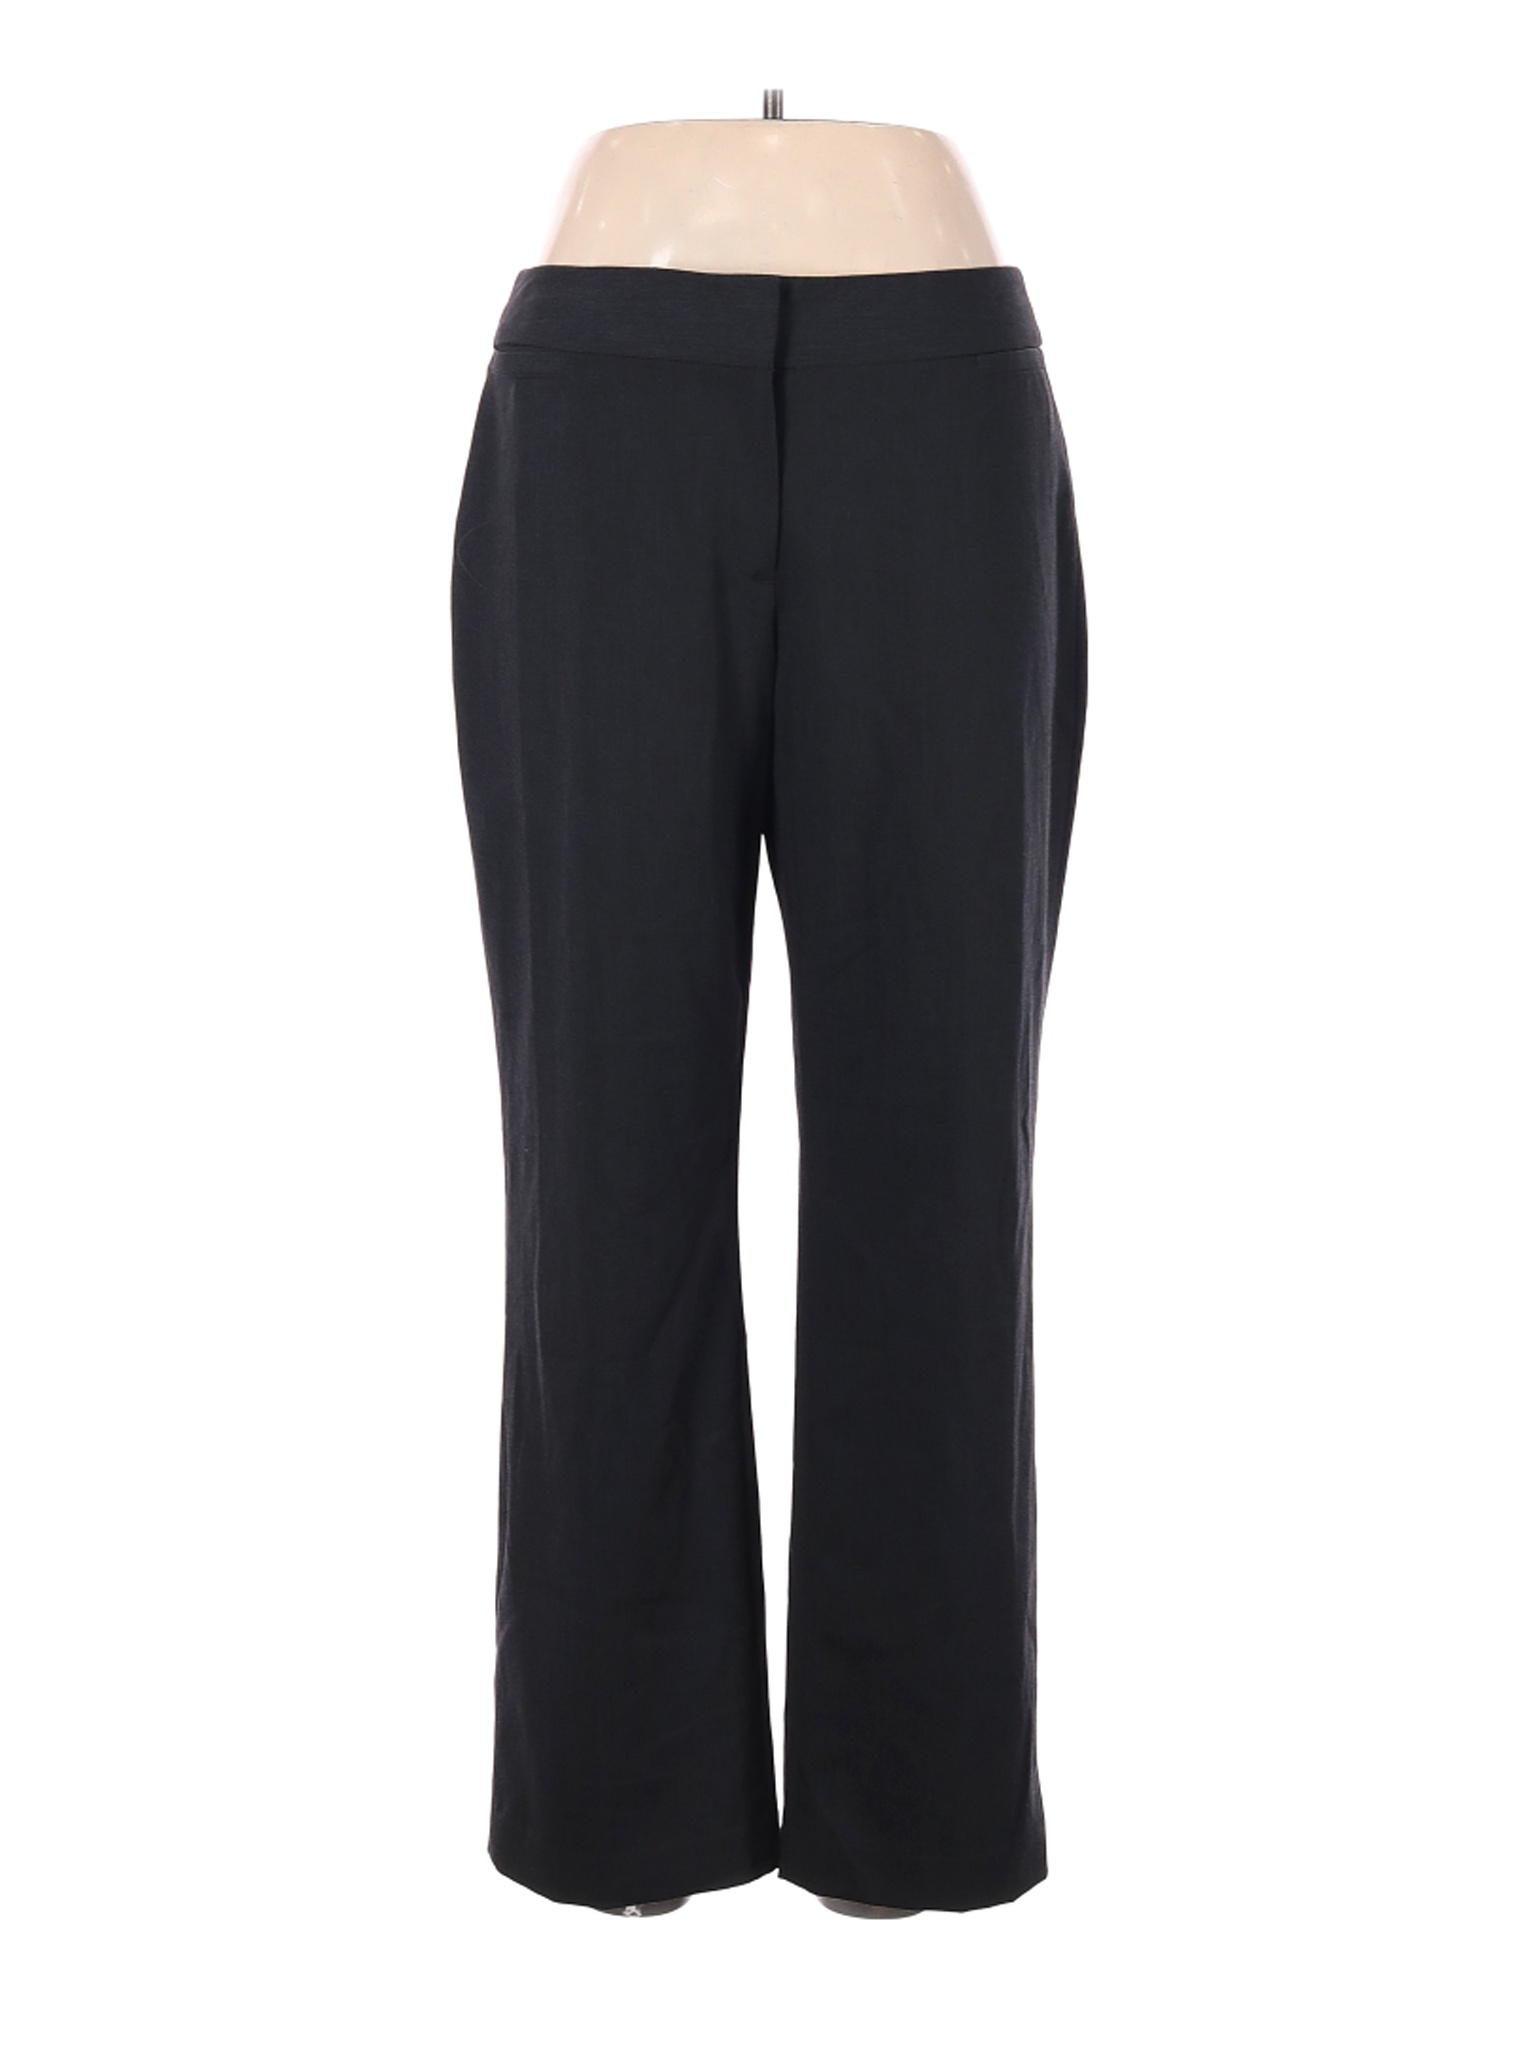 Liz Claiborne Women Black Dress Pants 12 Petites | eBay